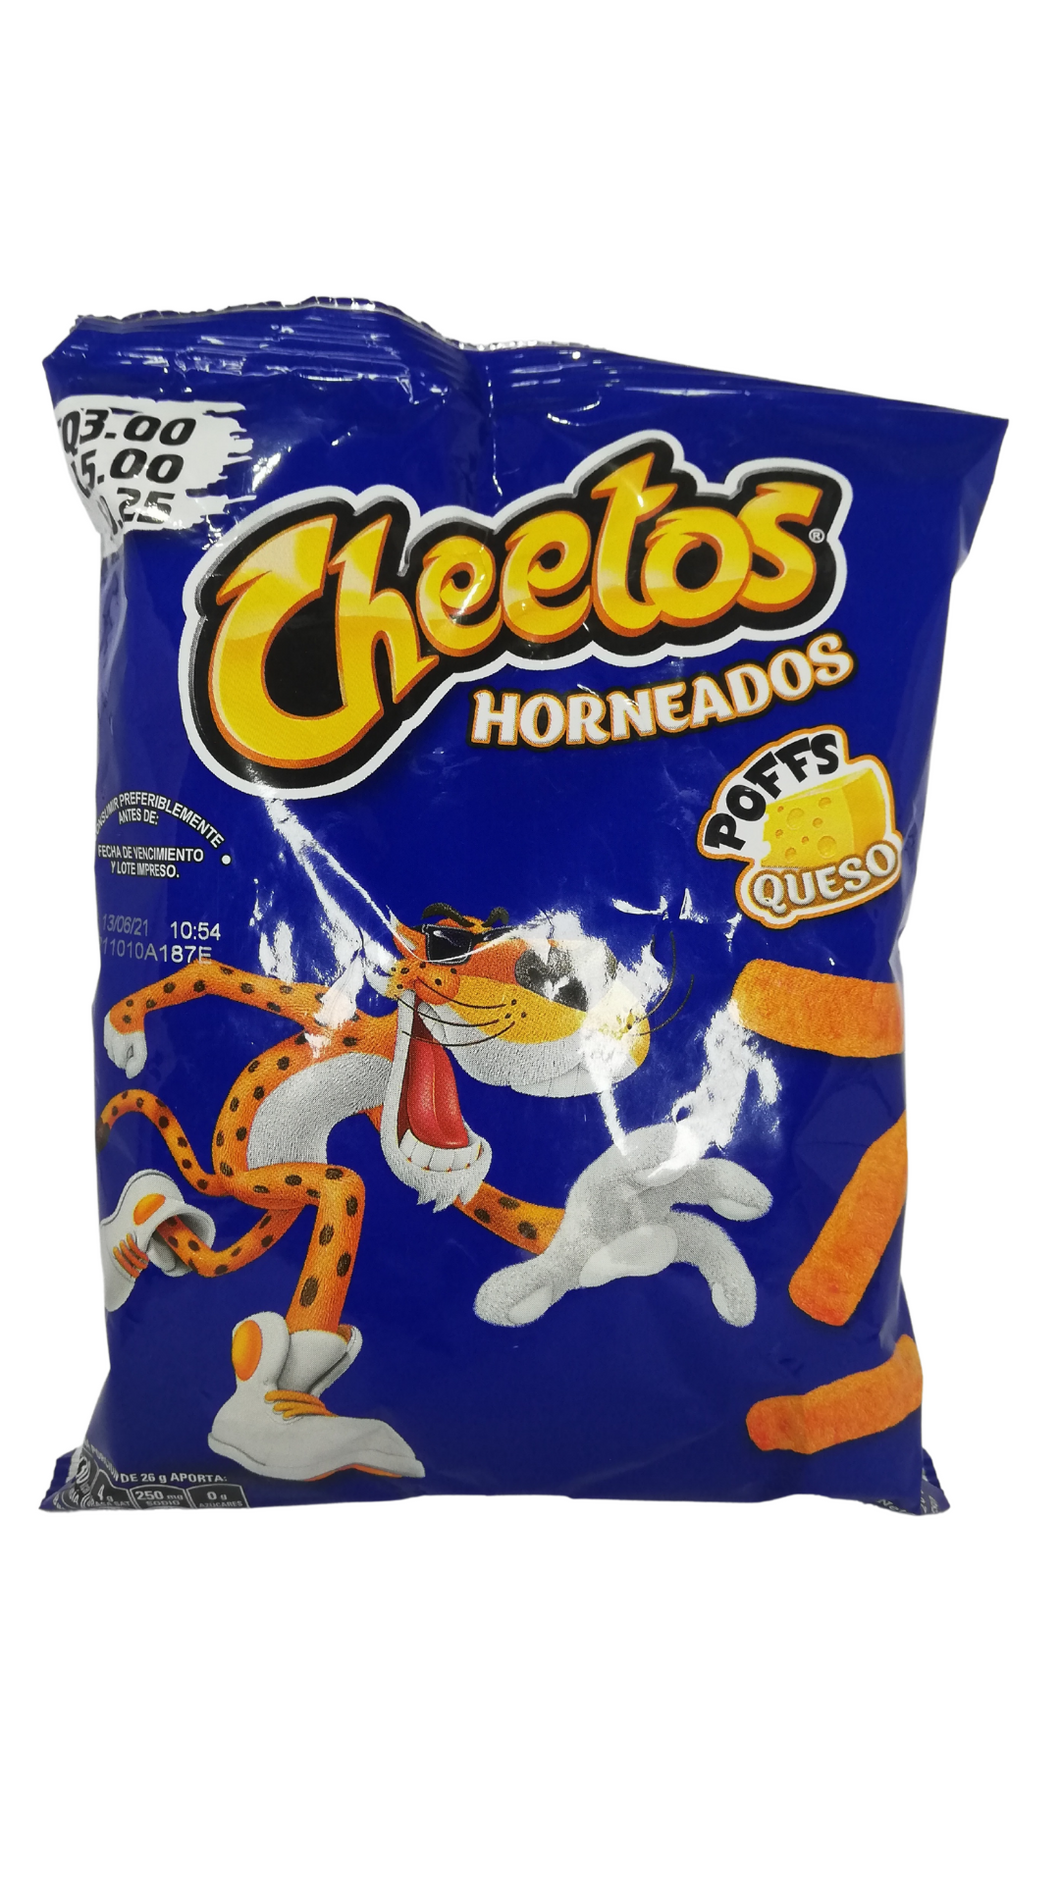 Cheetos Horneado Poffs queso 26g